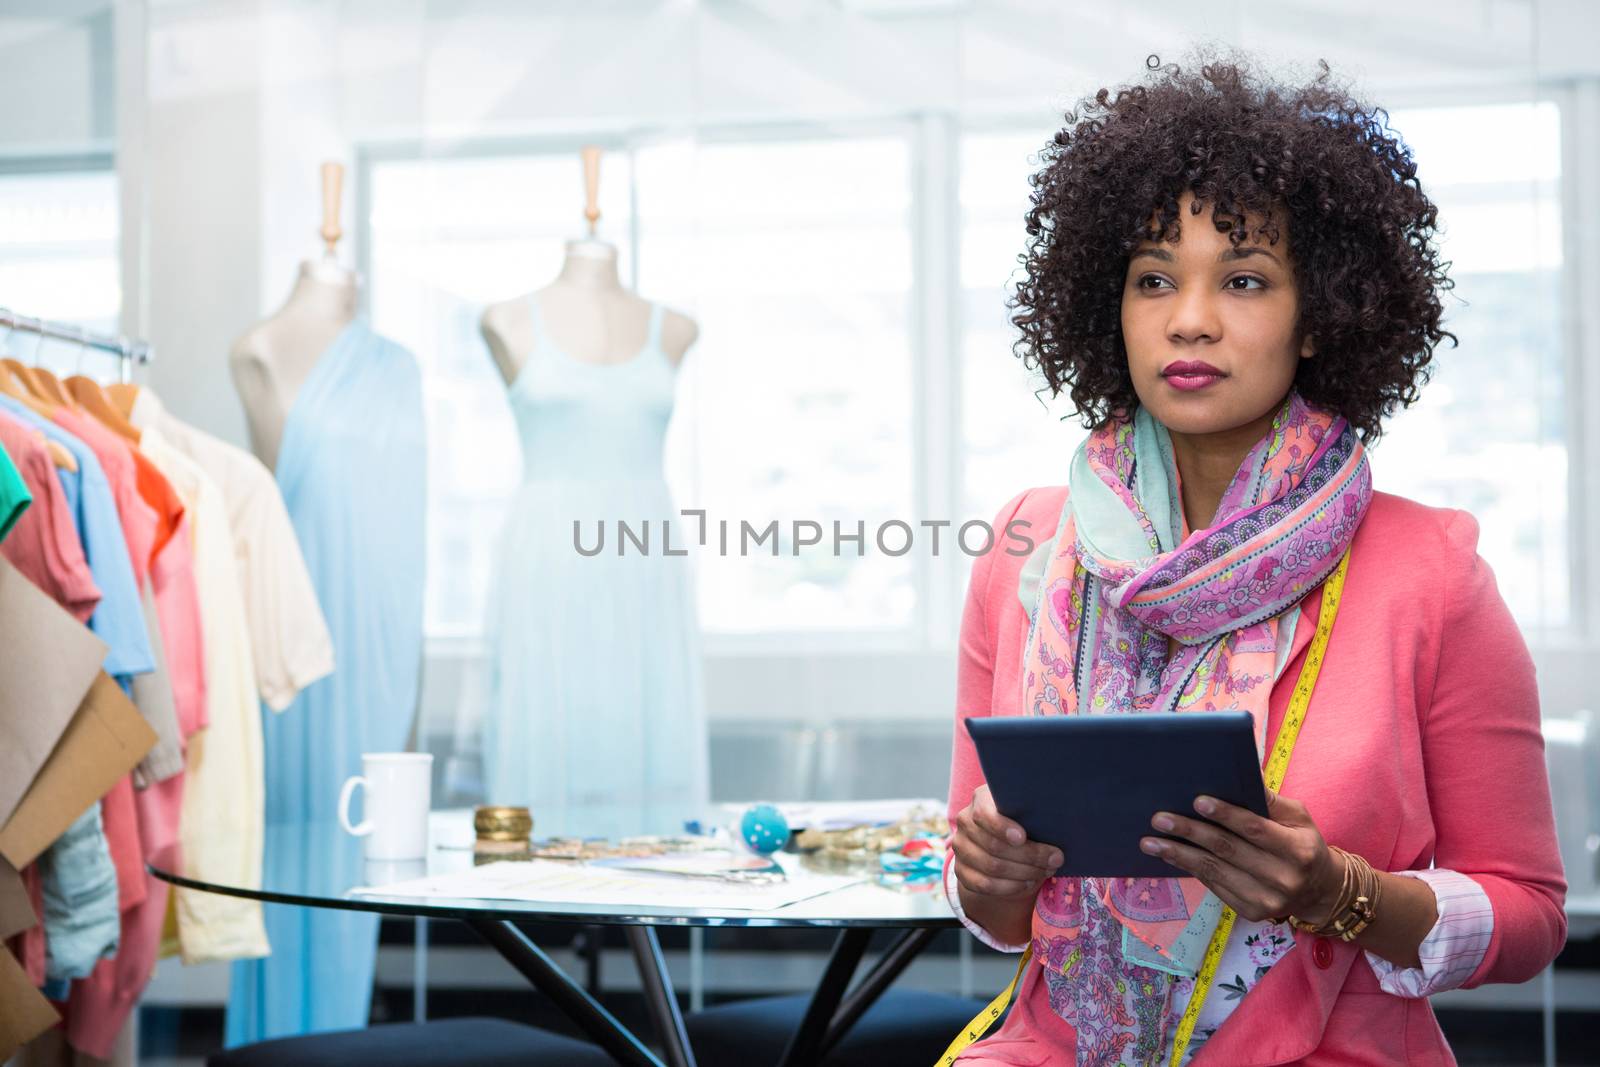 Attractive female fashion designer using digital tablet